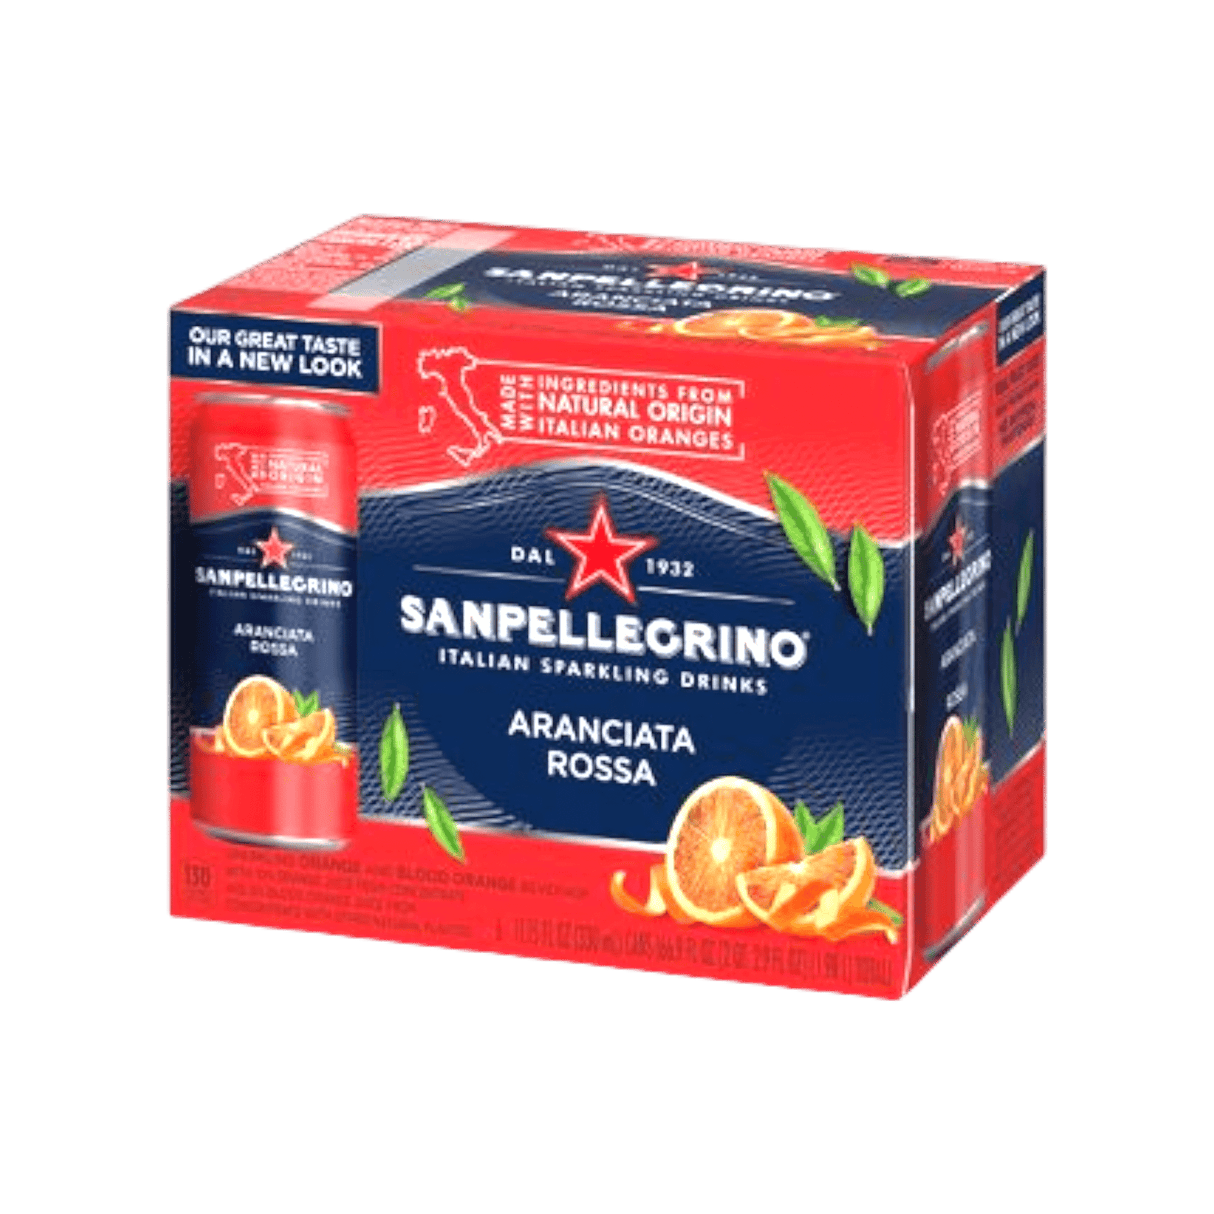 Sanpellegrino Aranciata Rossa Italian Sparkling Beverage